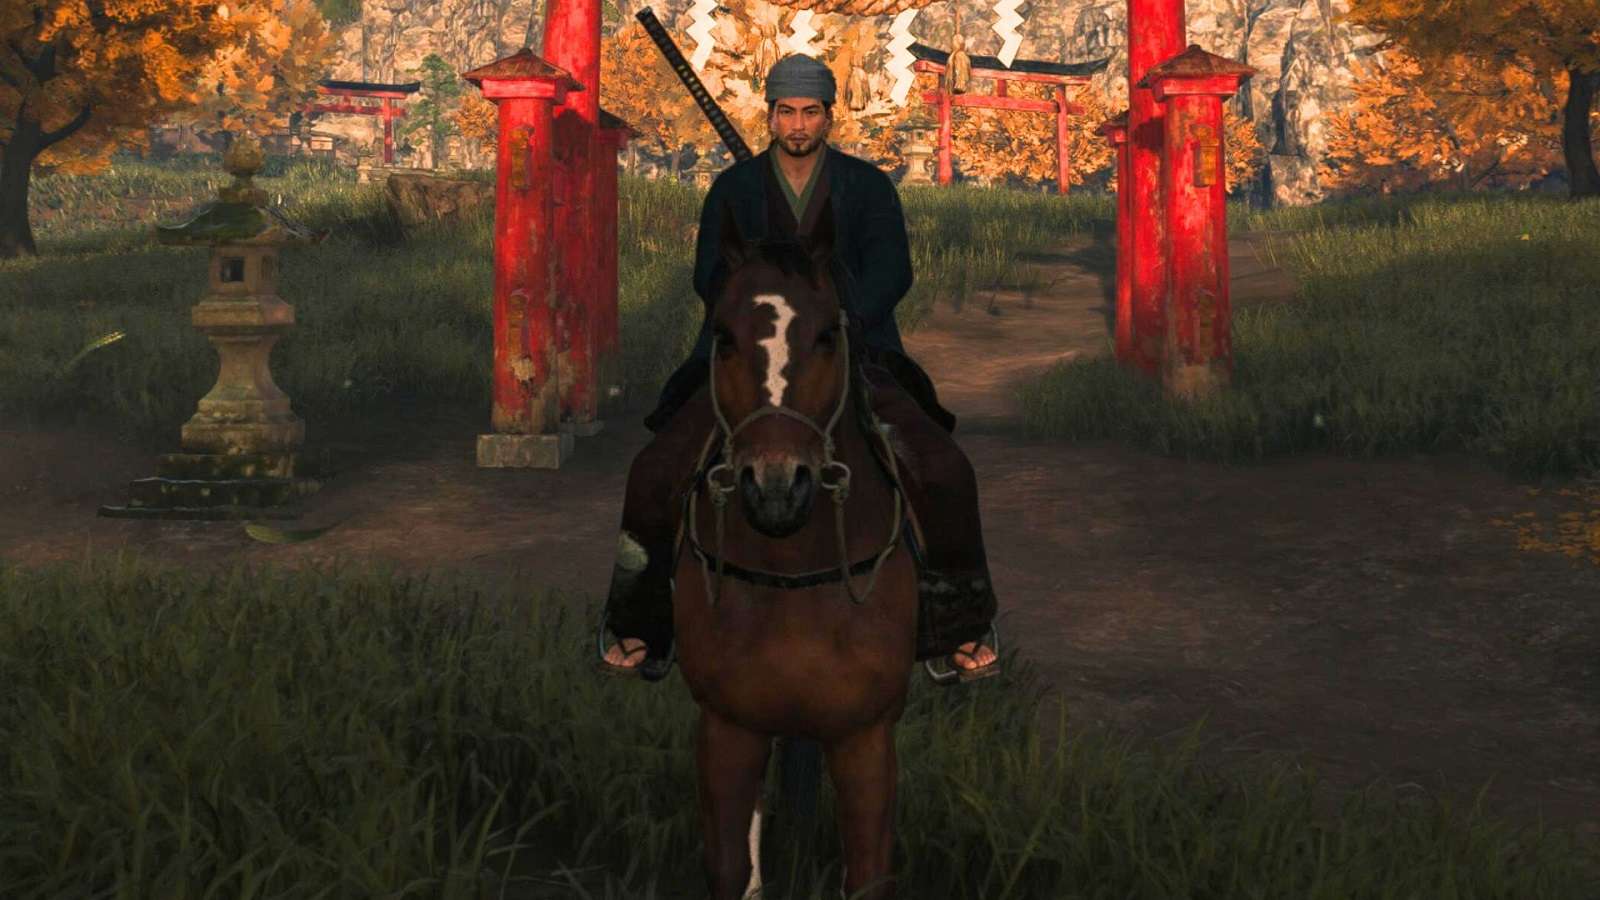 Ronin riding a horse